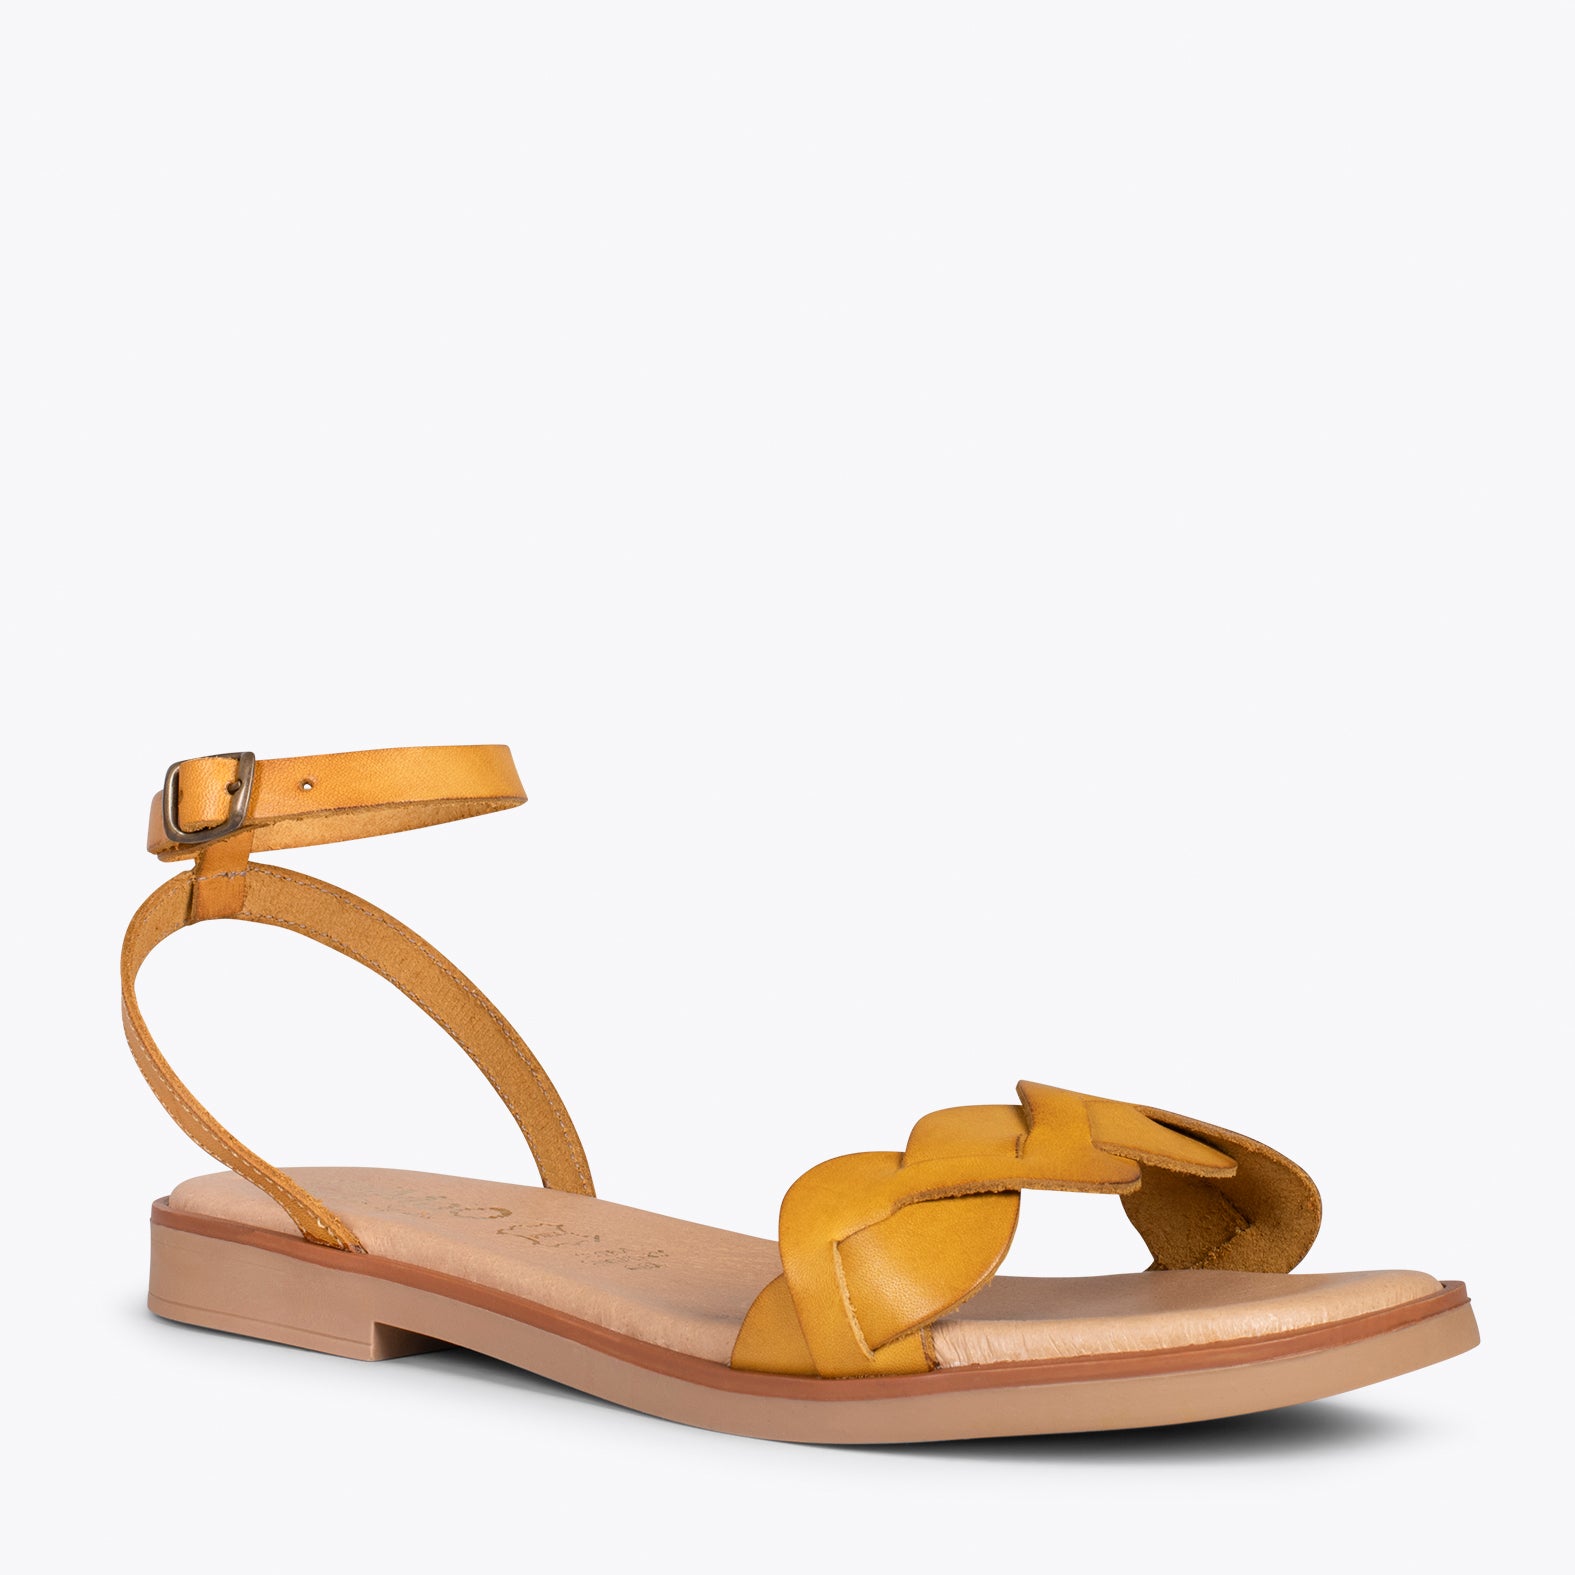 ARECA – MUSTARD flat sandal with braided upper